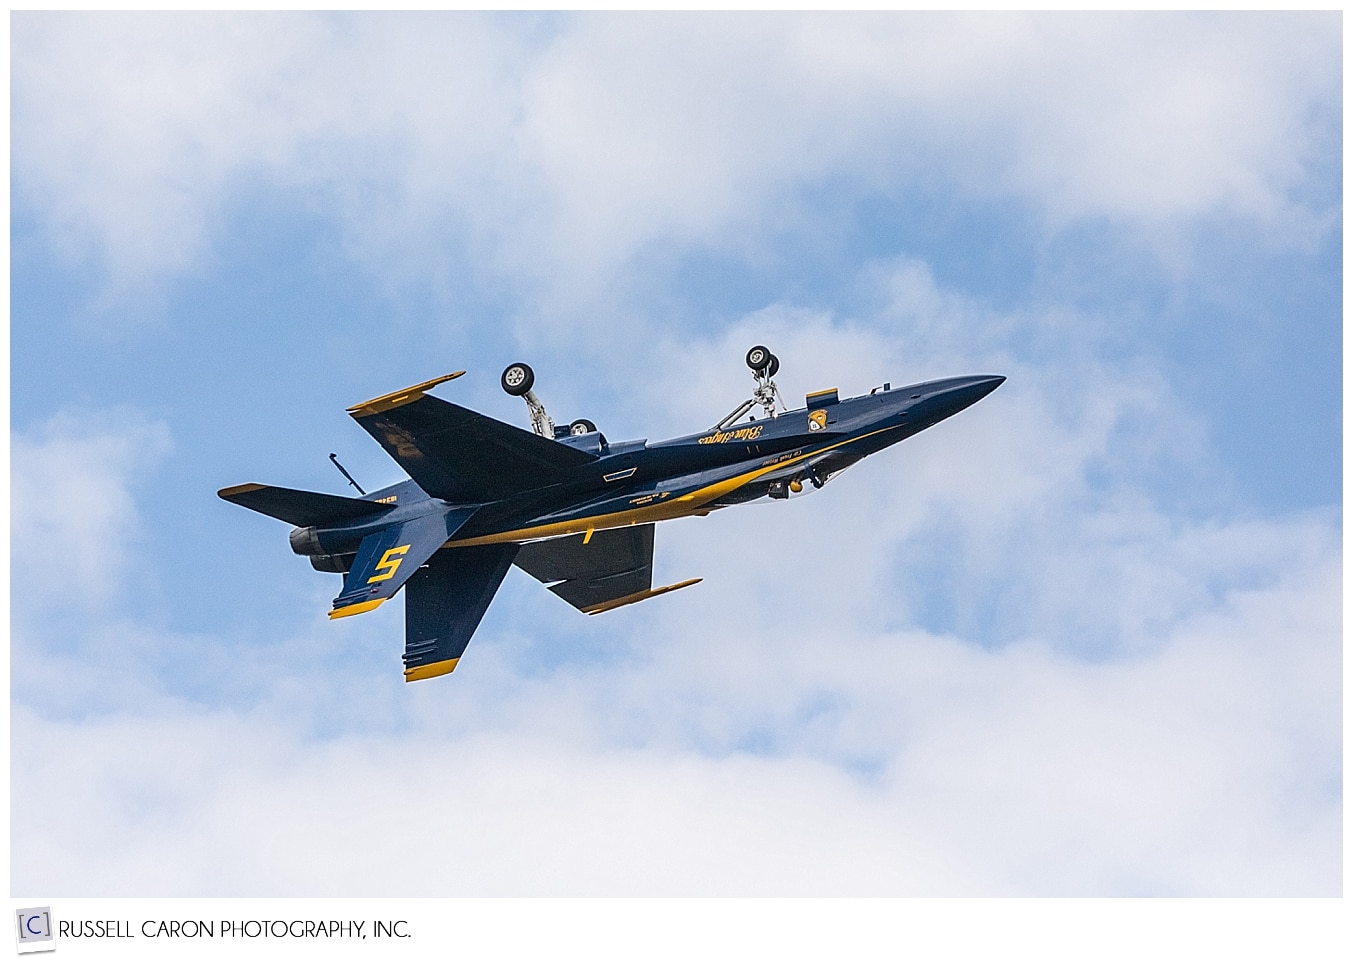 #5 US Navy Blue Angels flying upside down